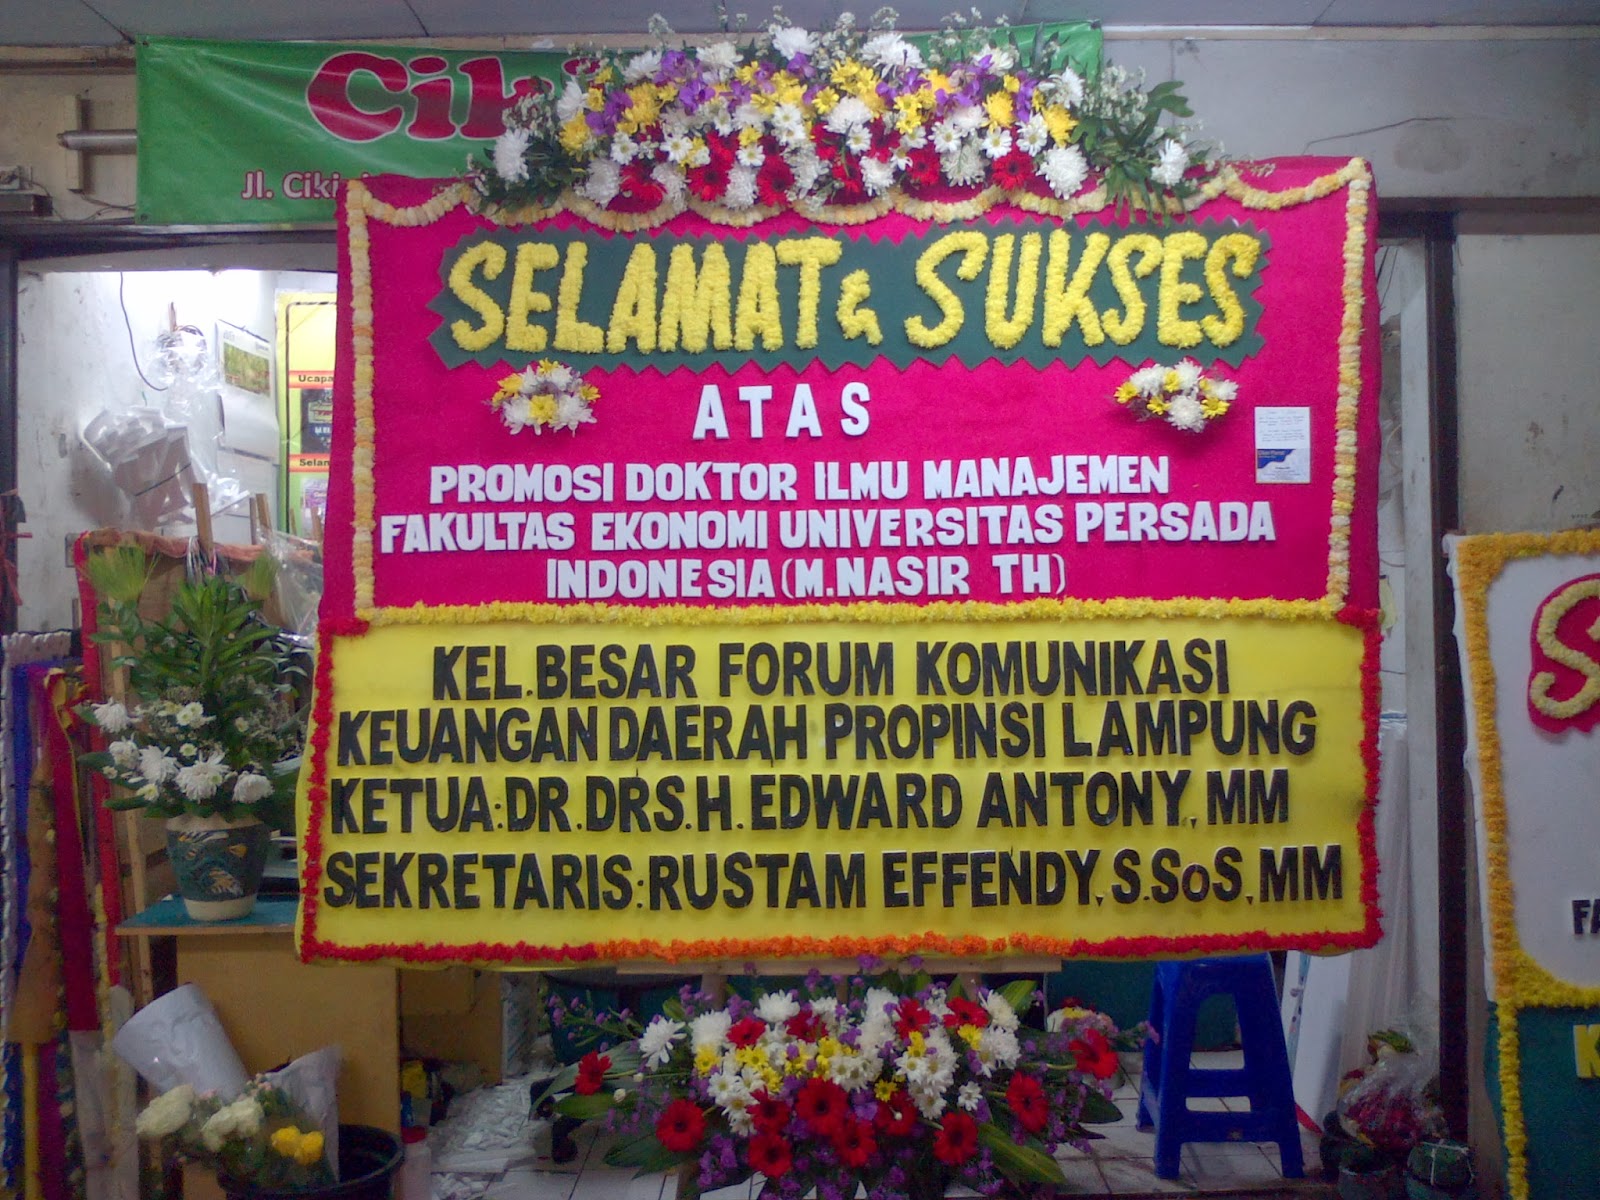 Toko Bunga Cikiniflorist Jakarta Contoh Produksi Bunga Papan Selamat Sukses Jakarta